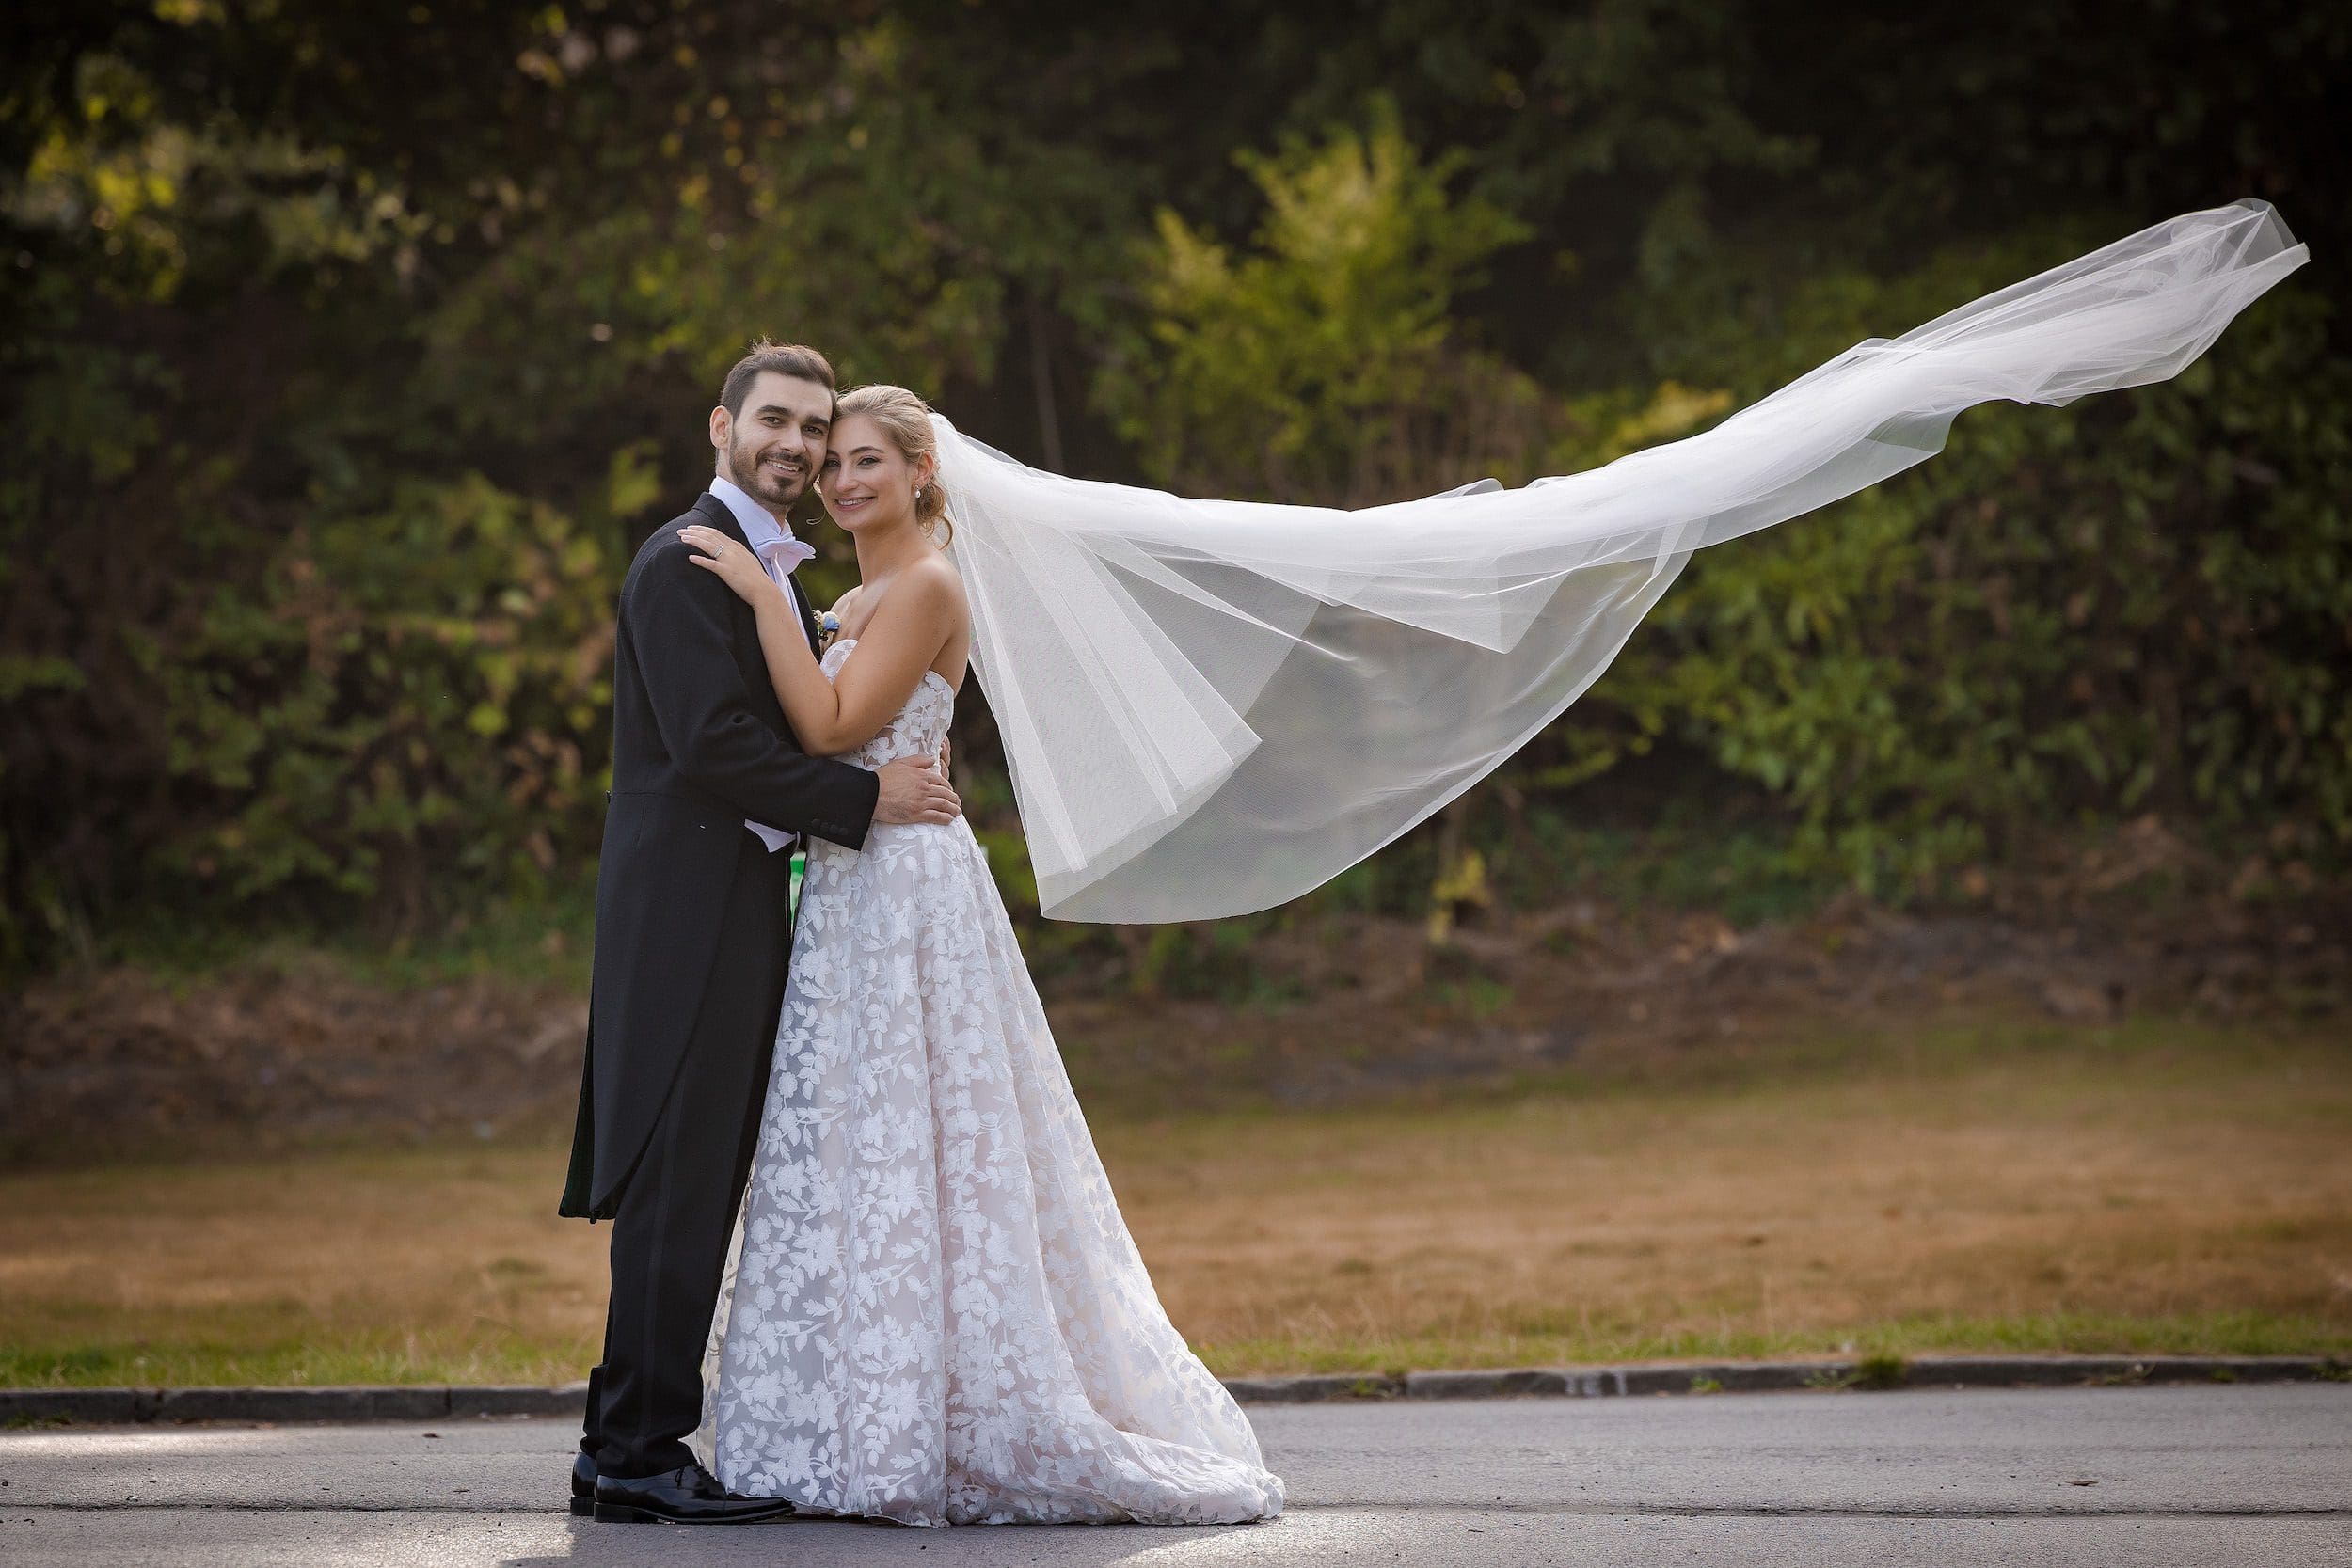 Chloe and husband professional wedding shoot